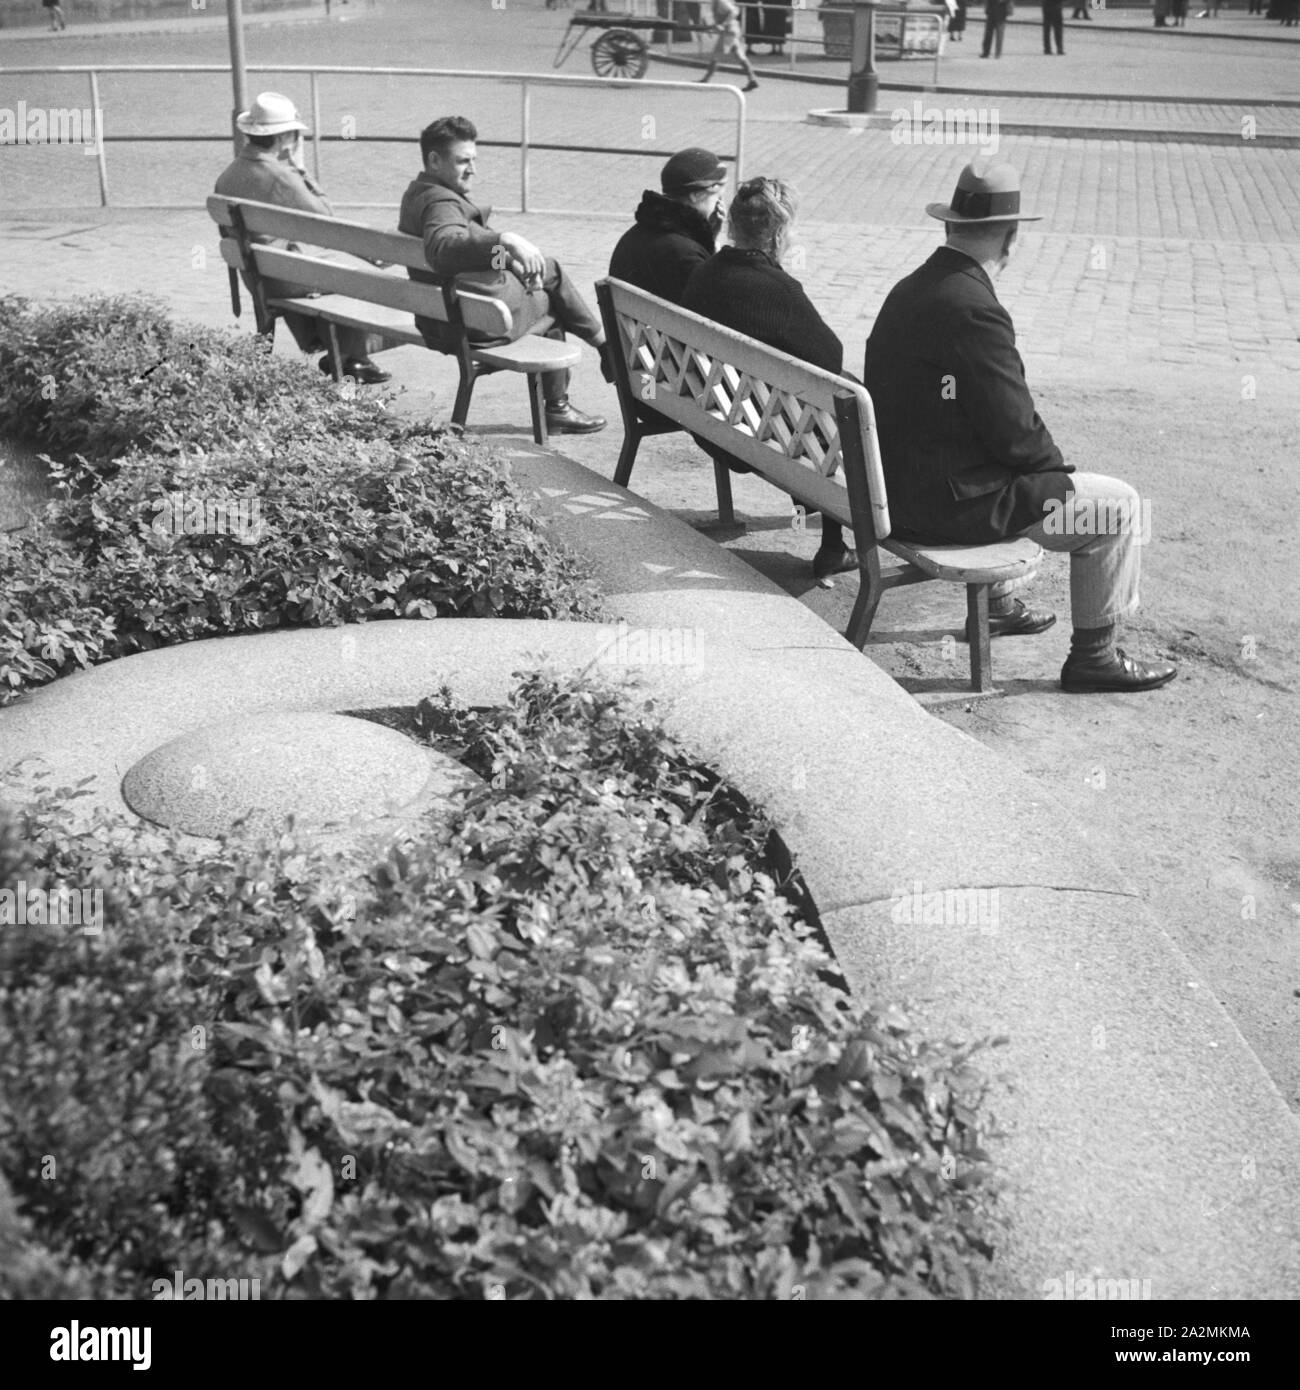 Passanten bei einer Pause auf einer Bank une einer Straße, Deutschland 1930er Jahre. Les passants en faisant une pause sur un banc par une rue, Allemagne 1930. Banque D'Images